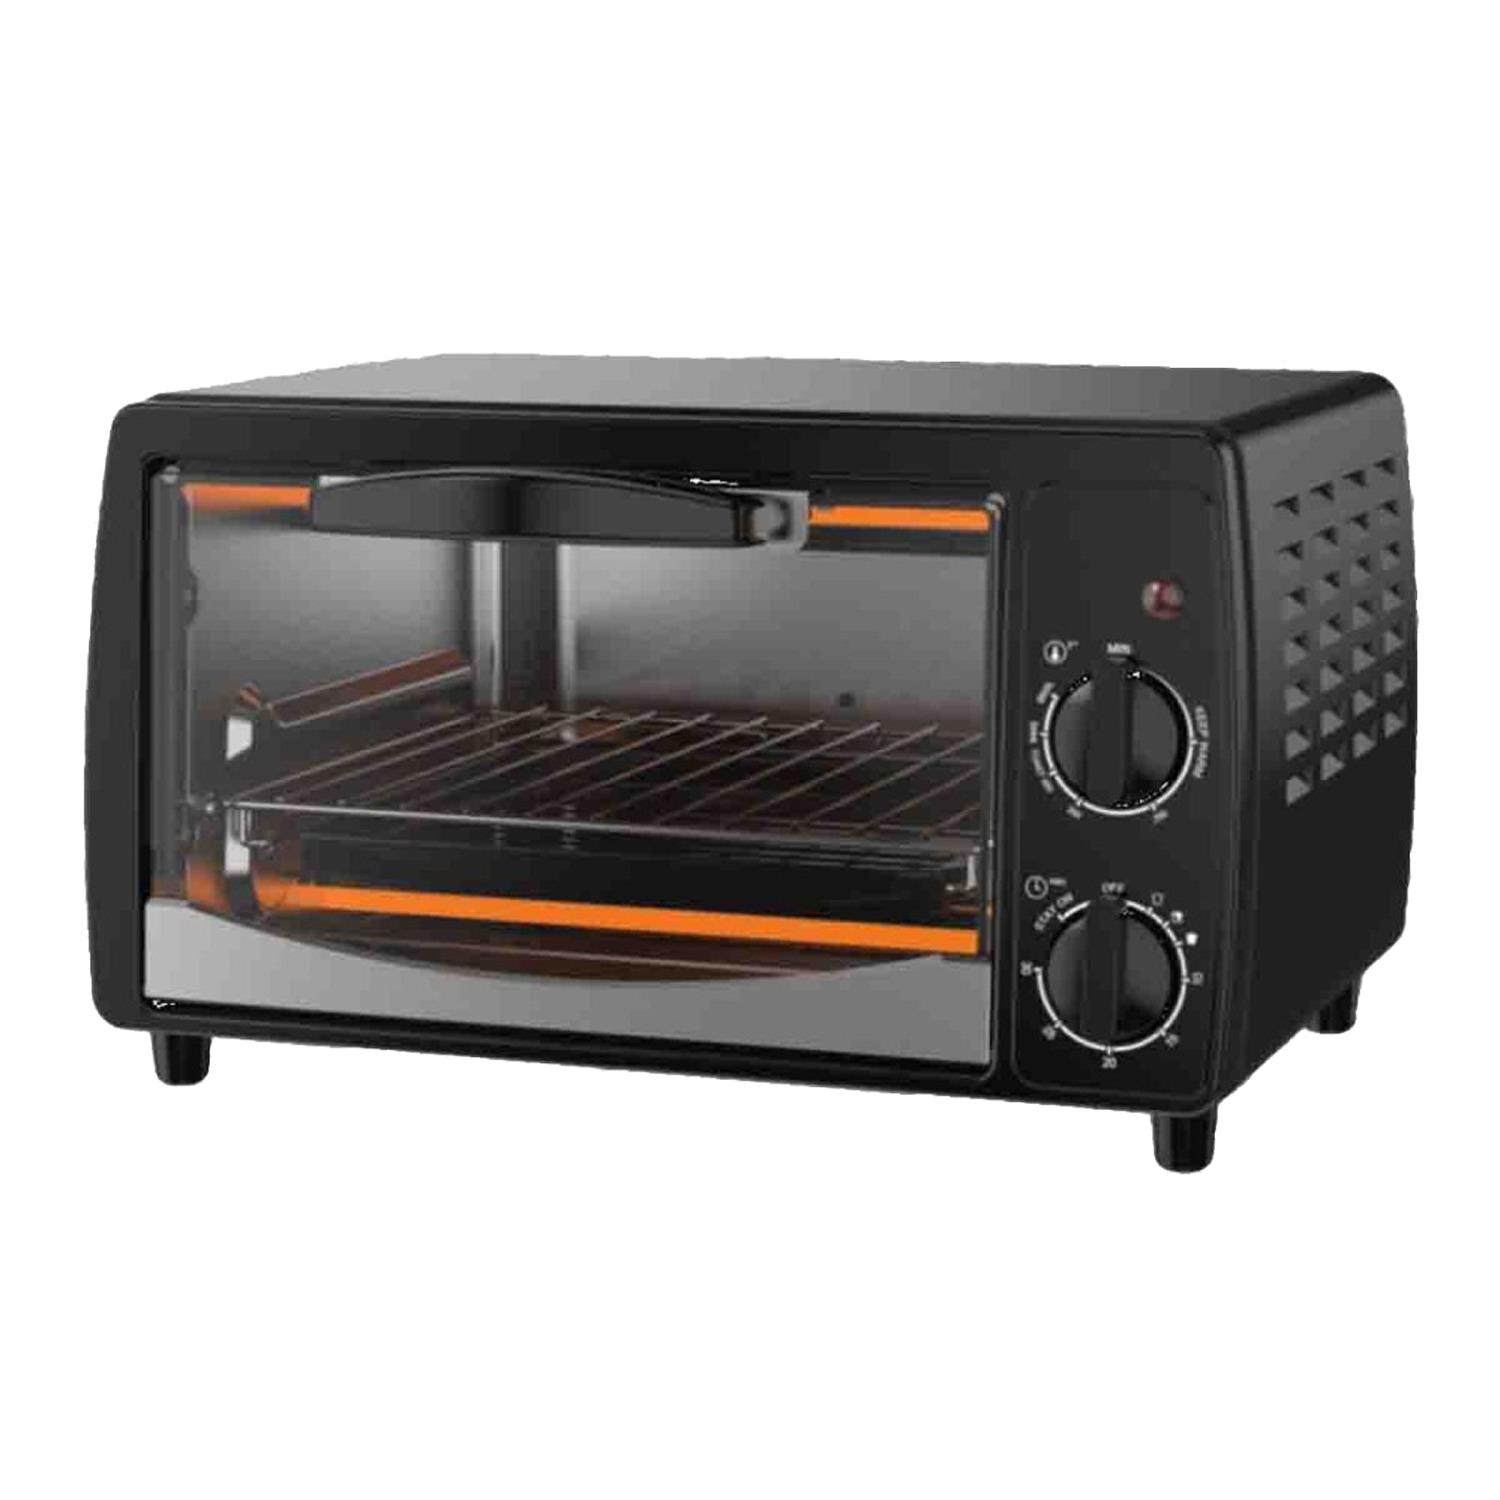 Toastess - Variable temperature 4-slice toaster oven